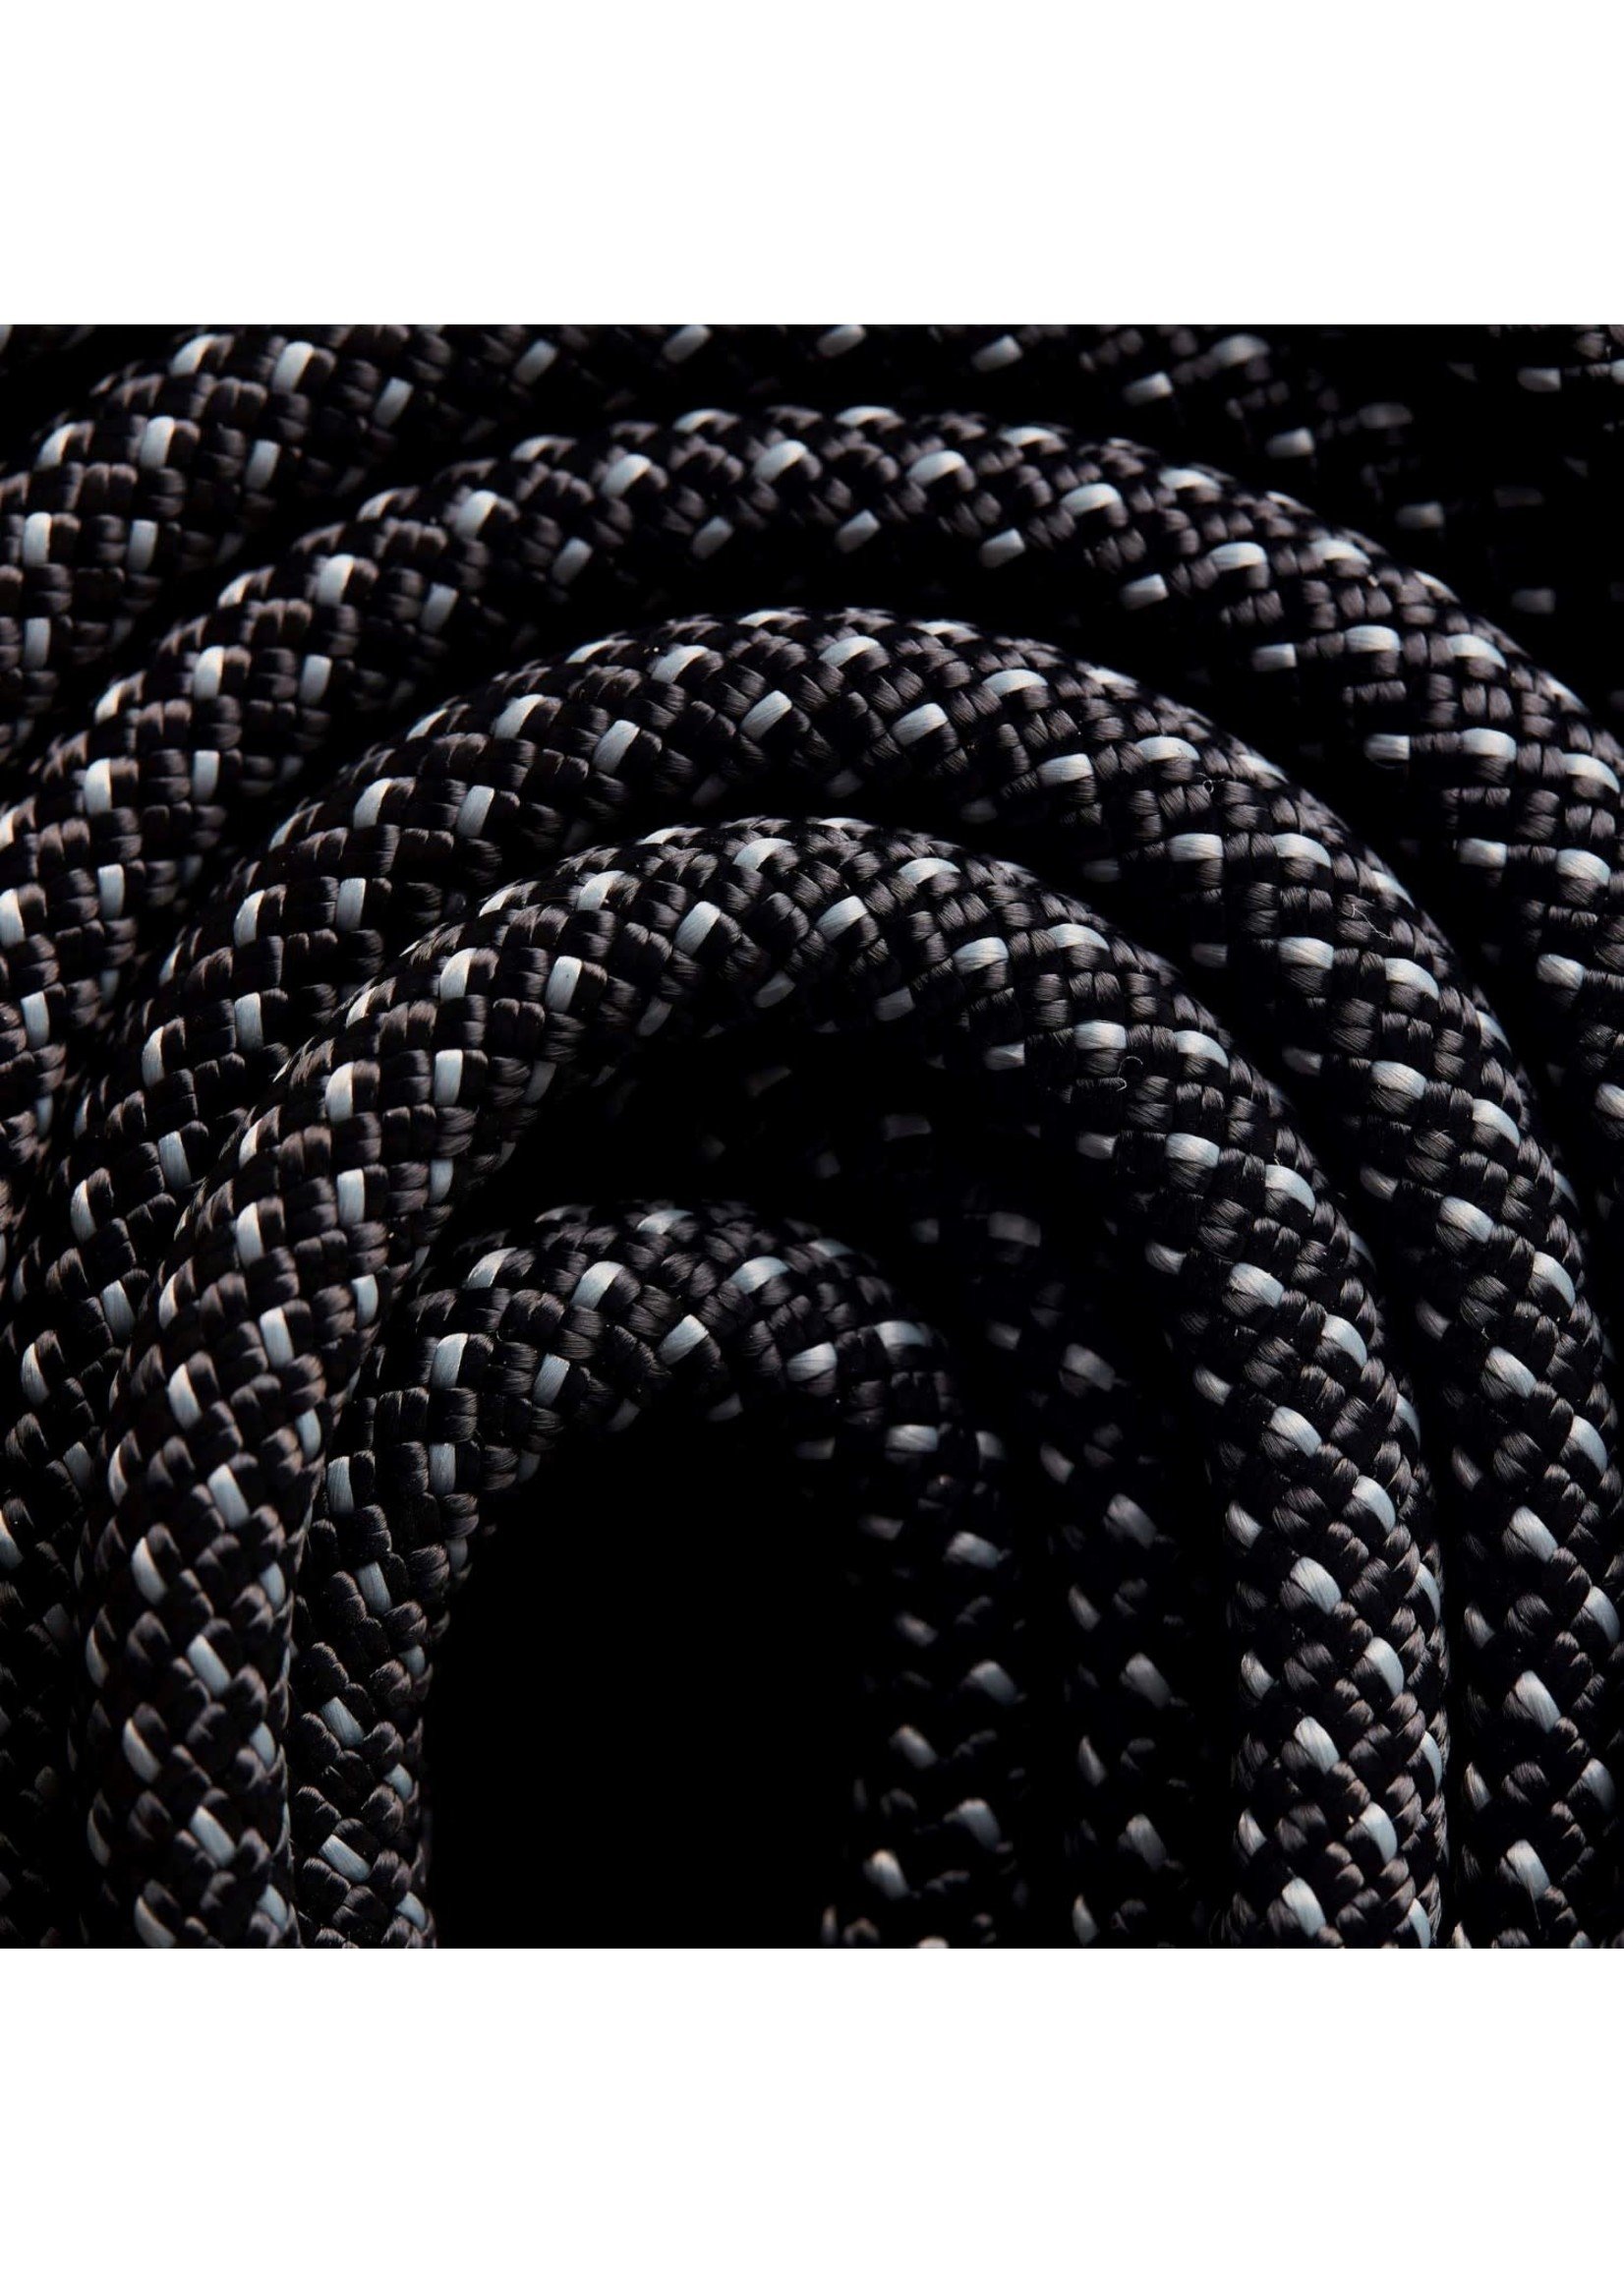 Black Diamond Black Diamond Static Rope - 10 mm